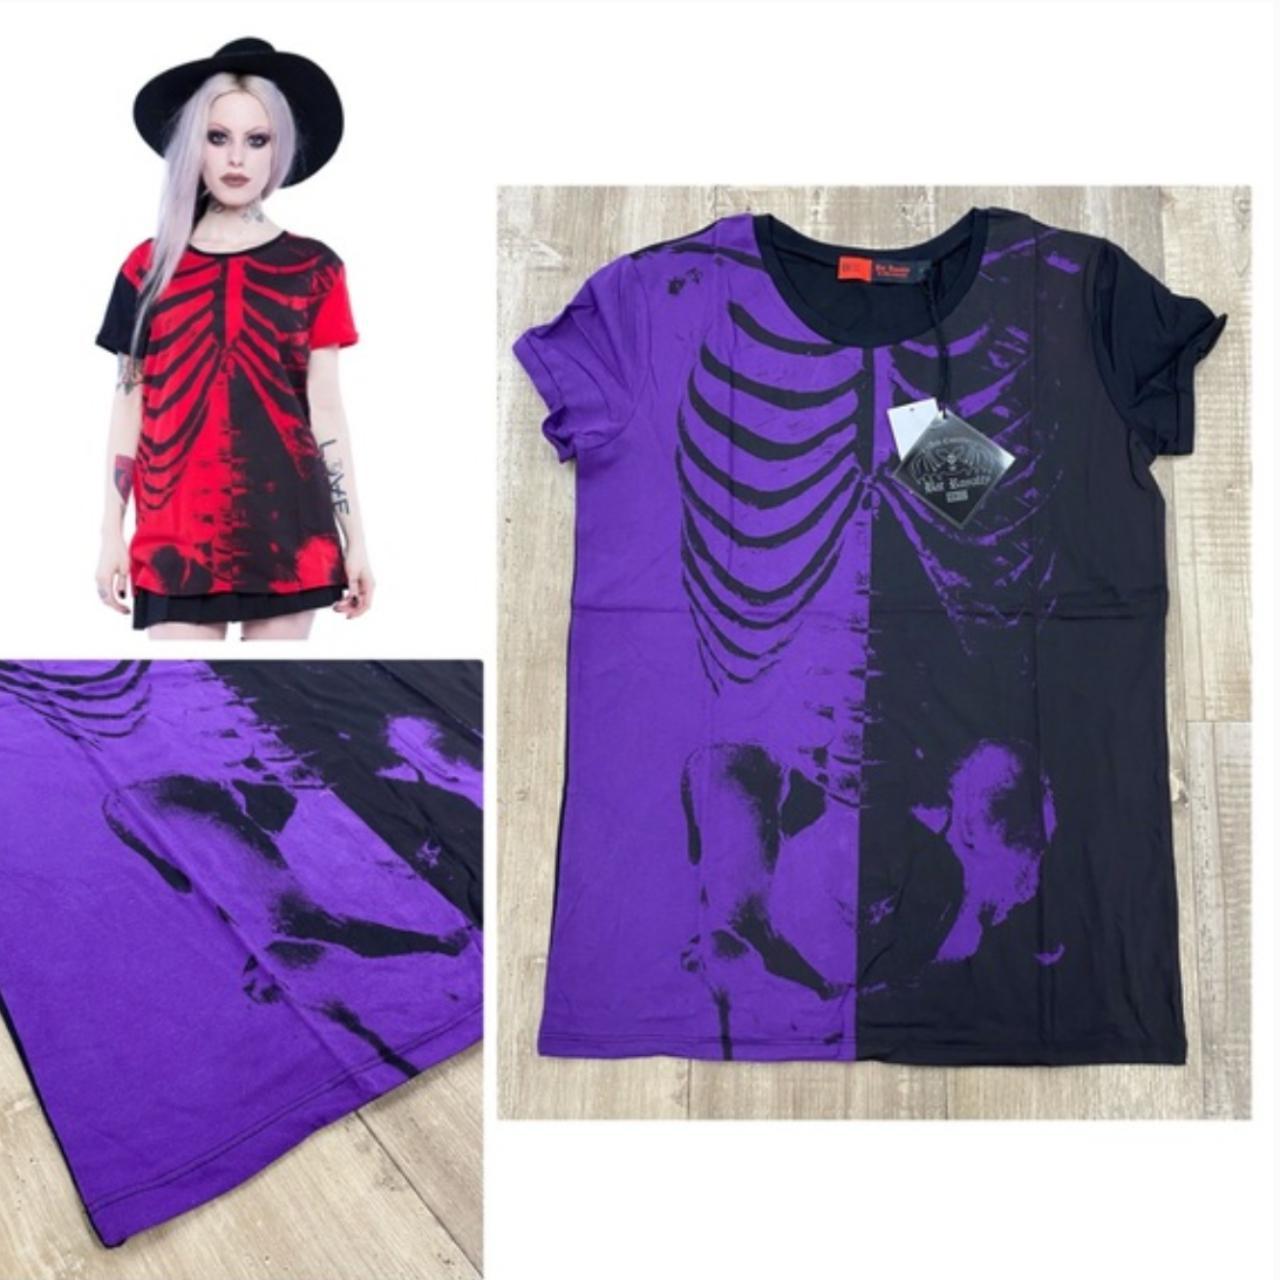 Iron Fist Women's Black and Purple T-shirt (3)